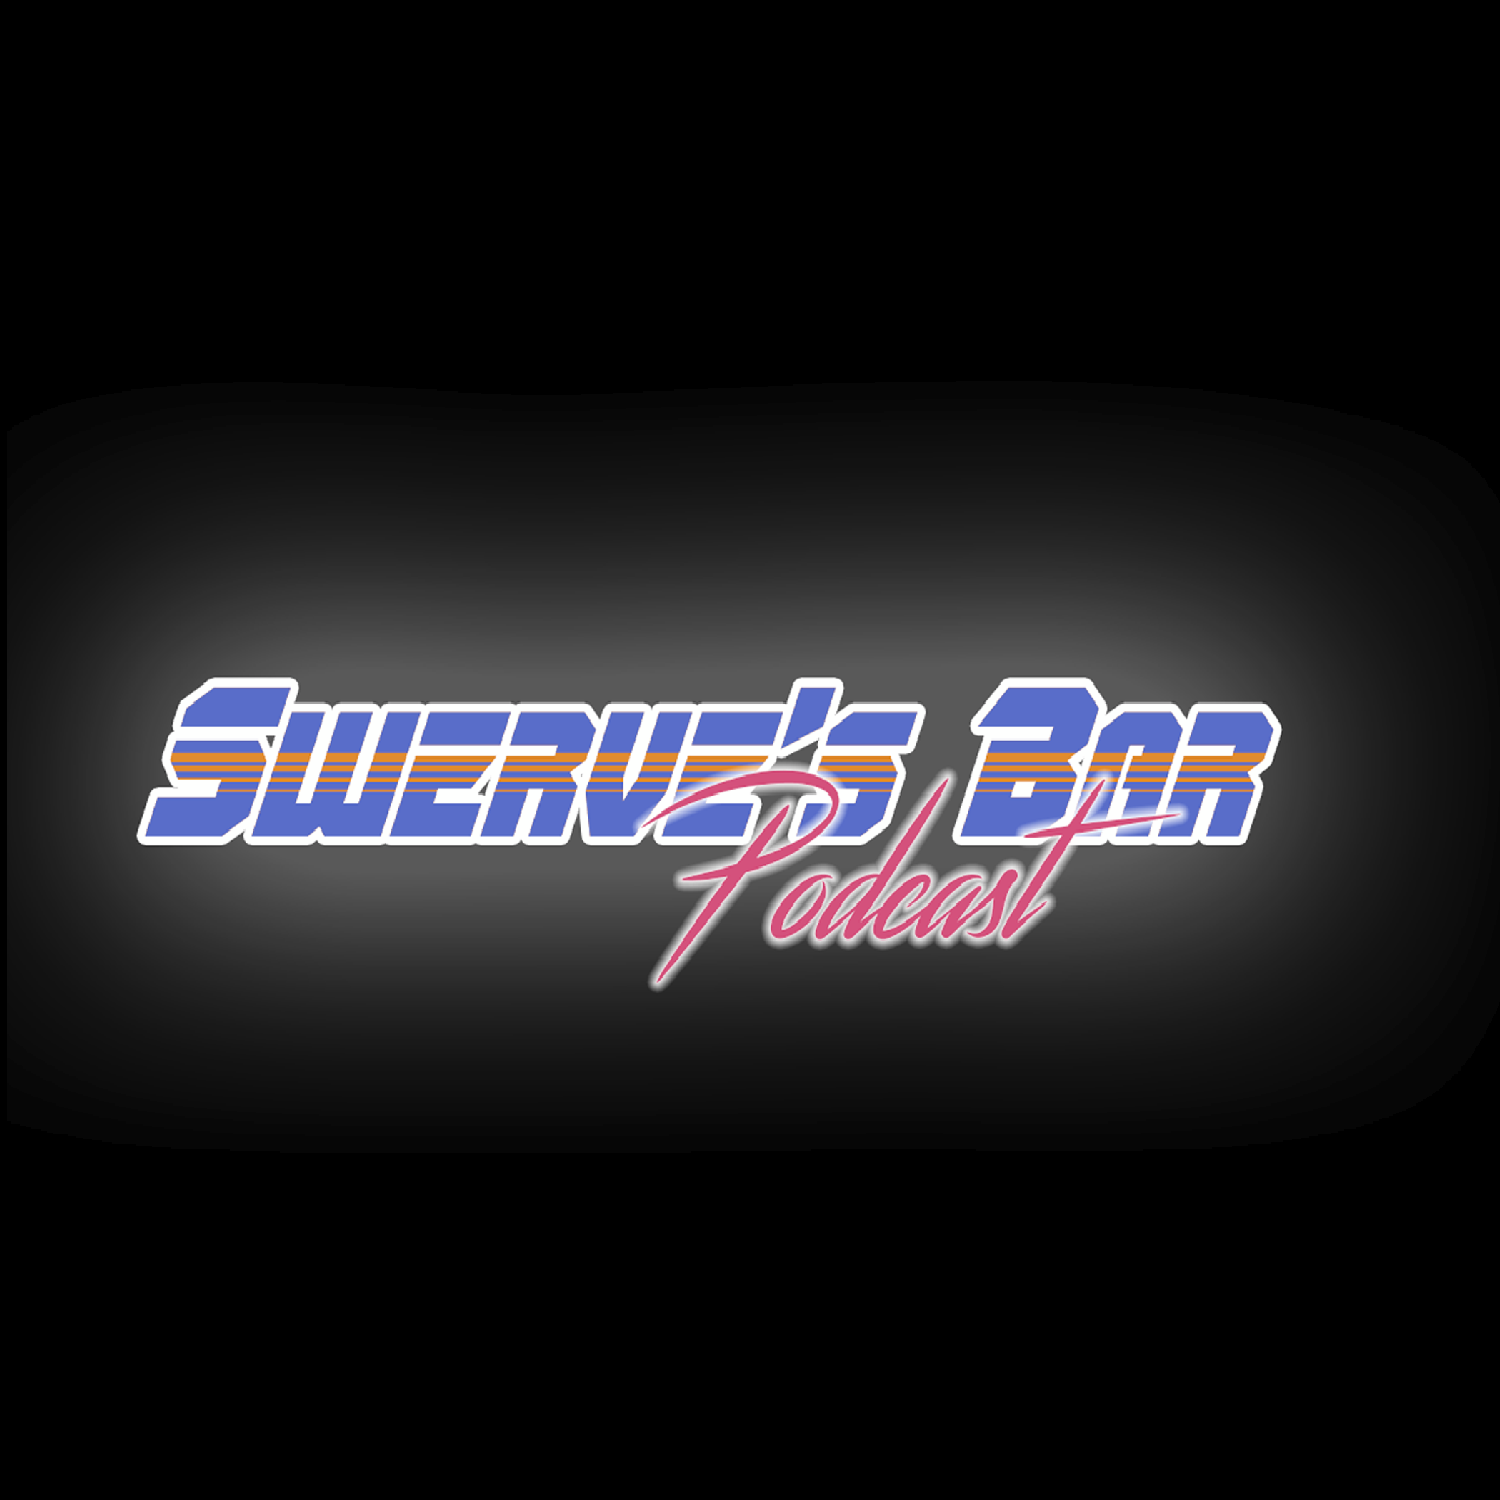 Swerve‘s Bar Podcast